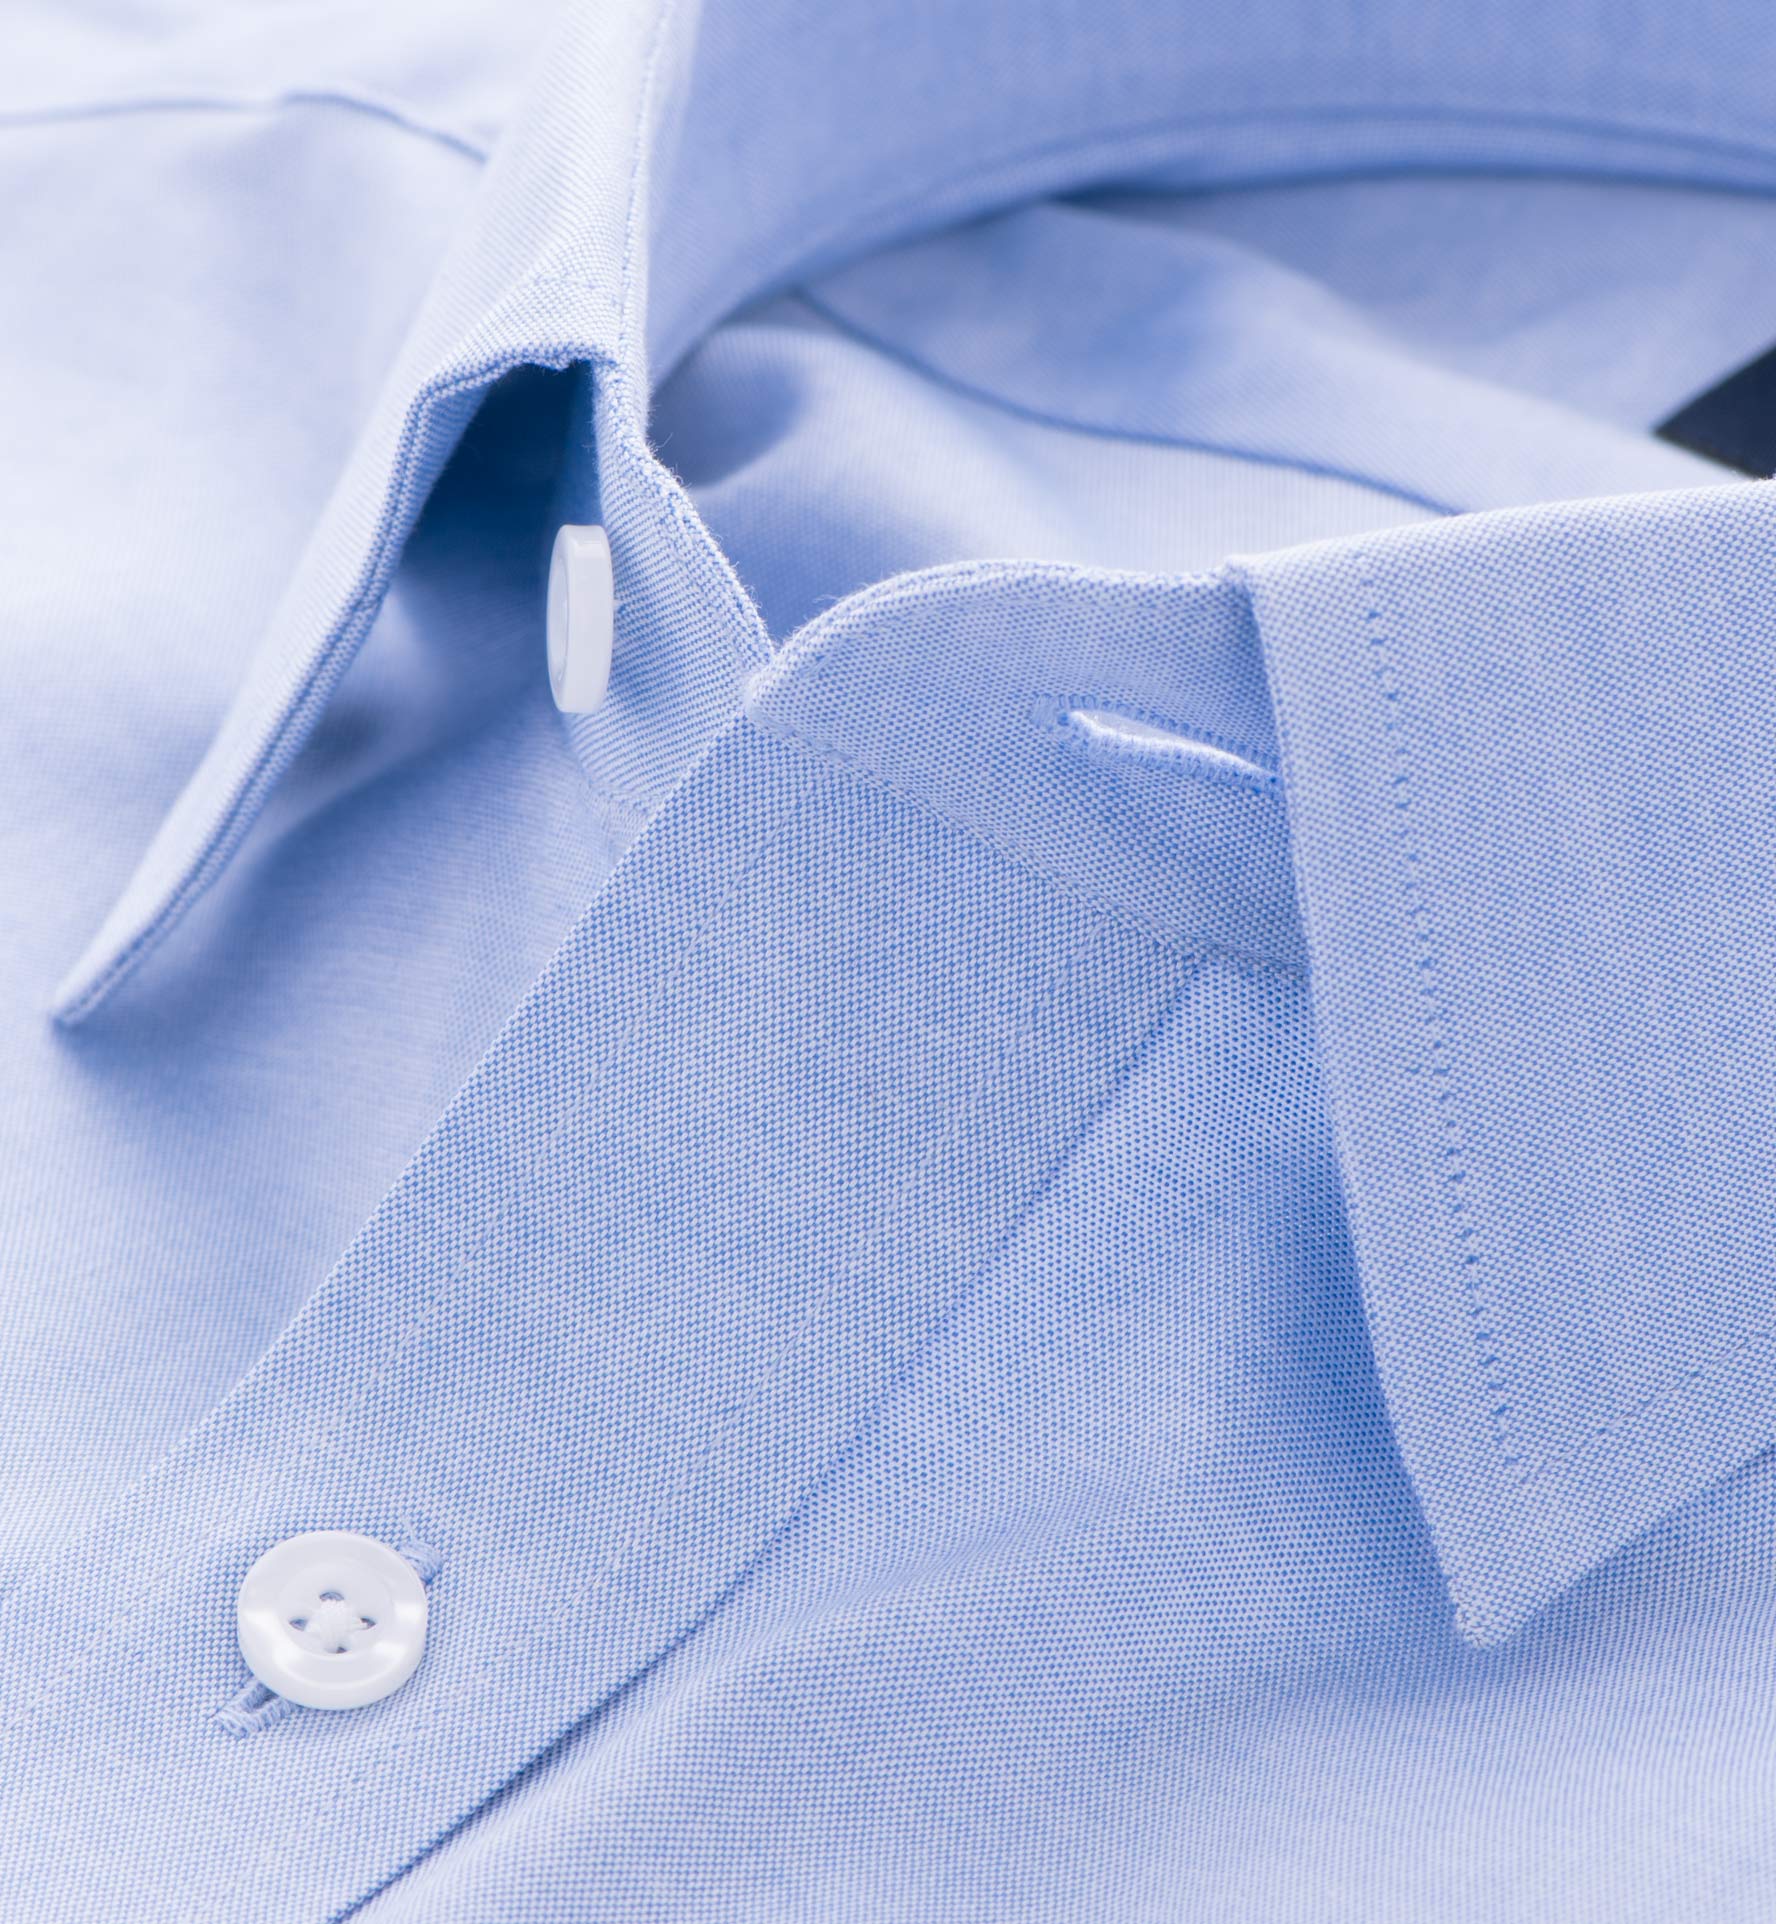 Weston Blue Pinpoint Dress Shirt by Proper Cloth